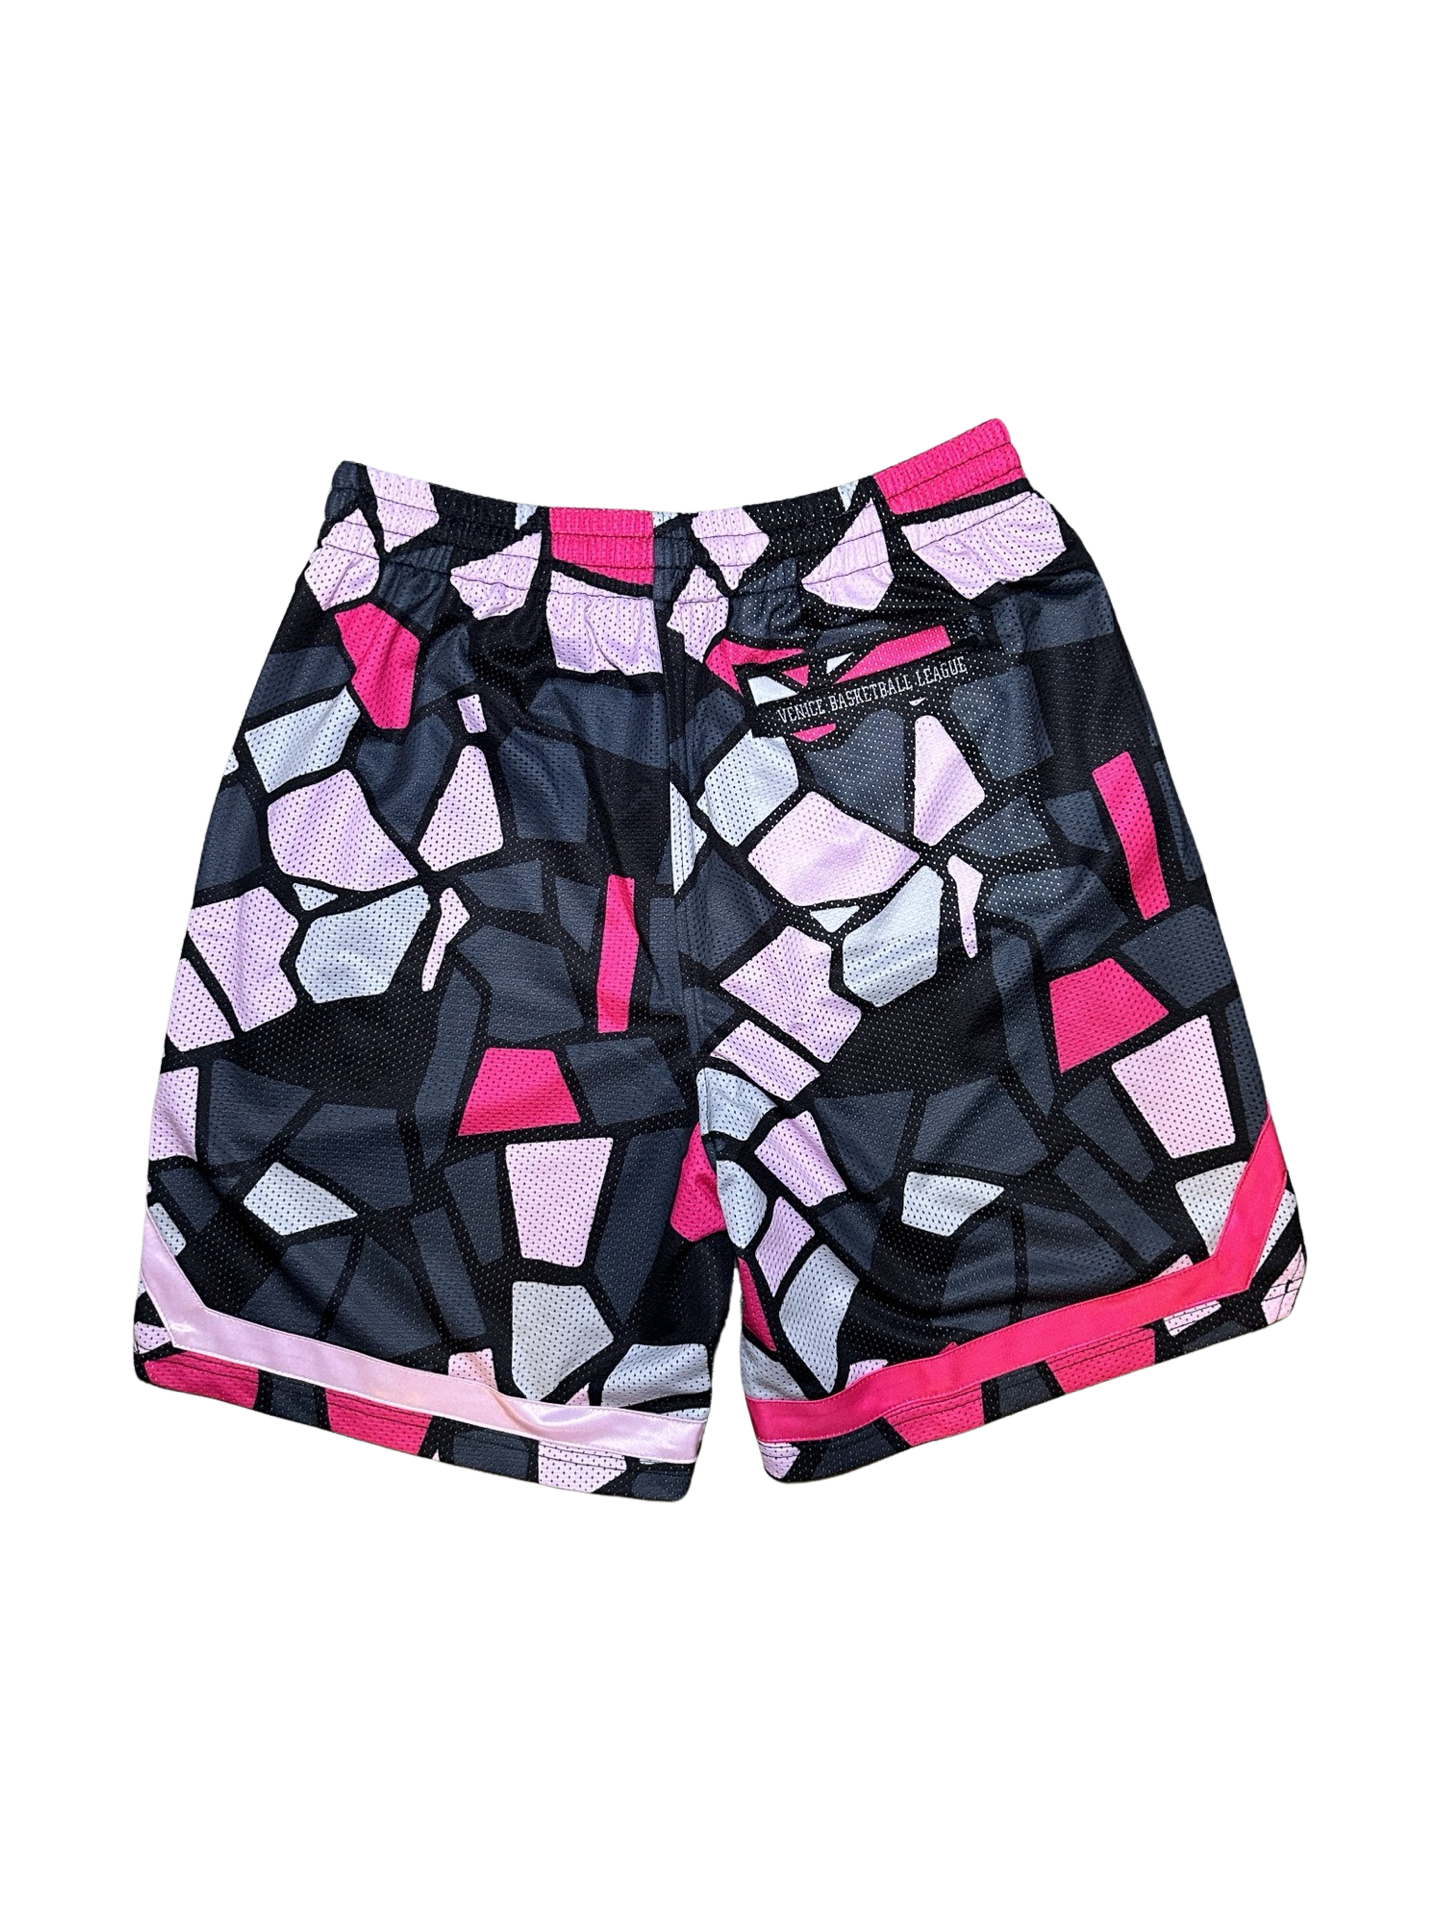 Venice Beach League Pink Shorts